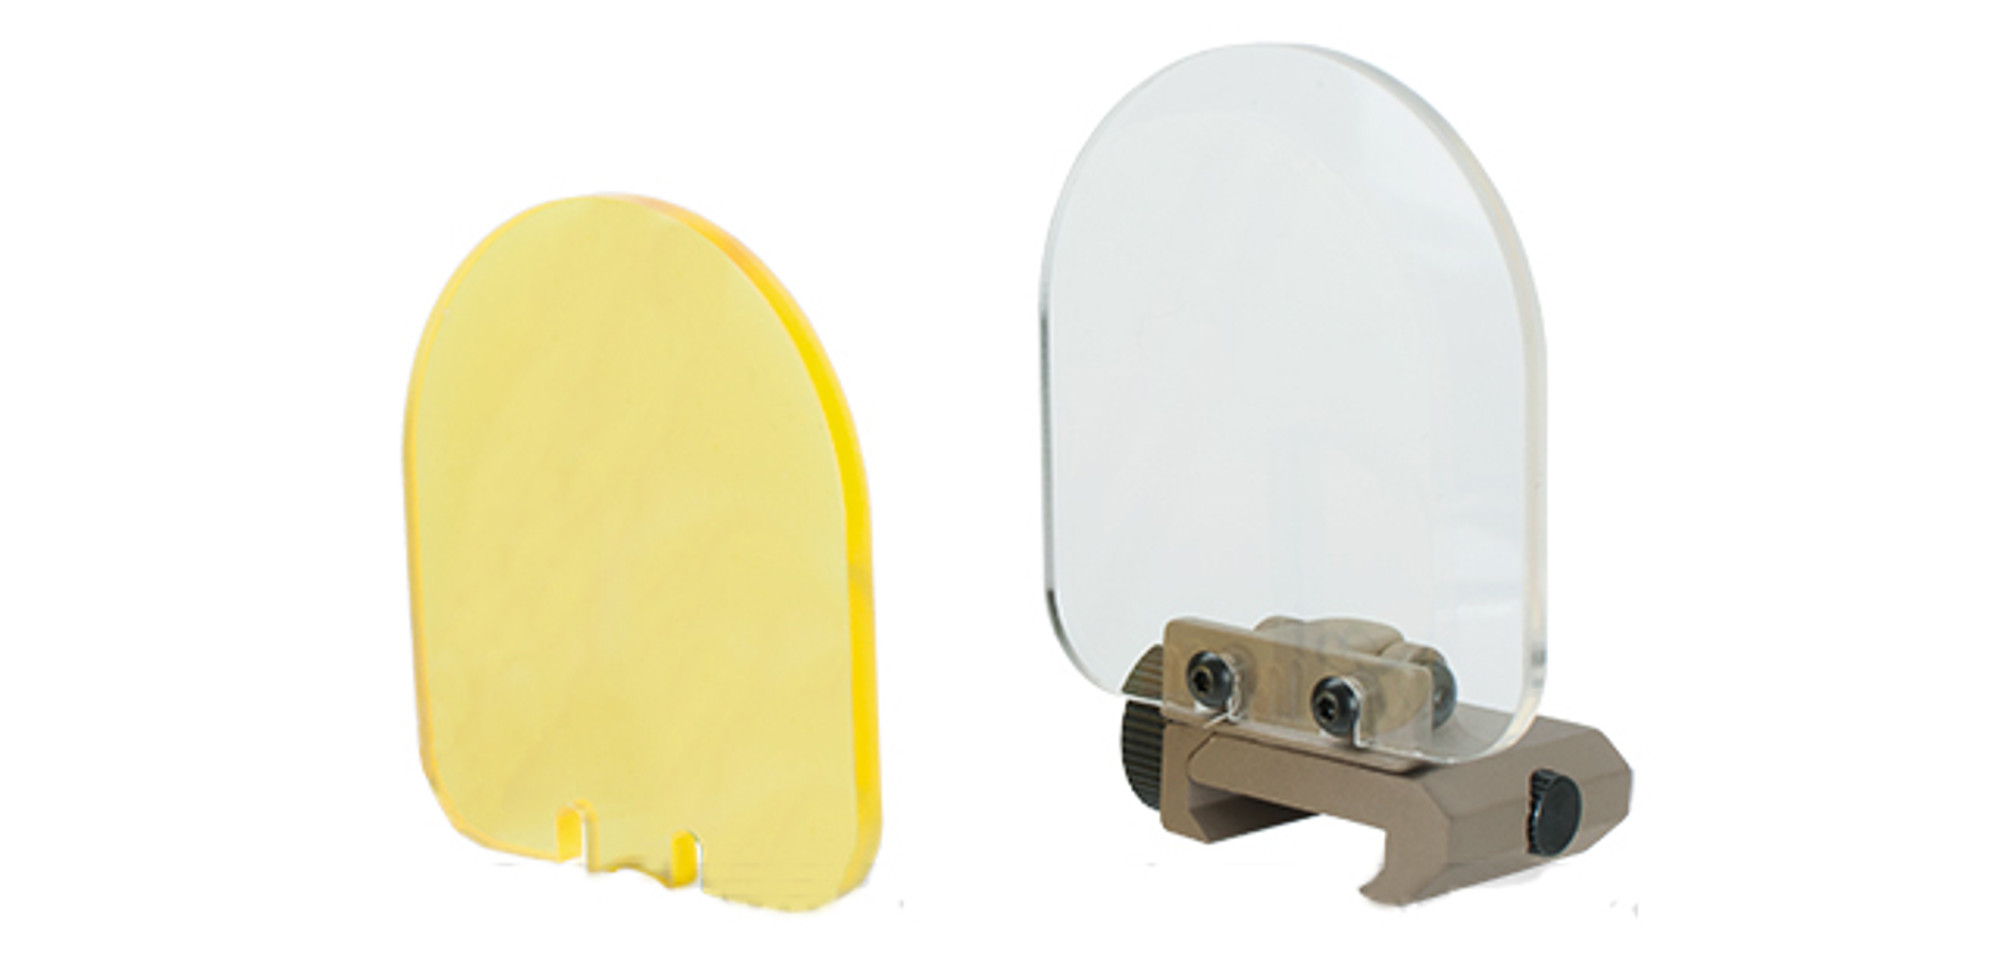 Flip-up QD Scope Lens / Sight Shield Protector (Weaver / Rail Mounted) by Matrix (2 lens) - Dark Earth